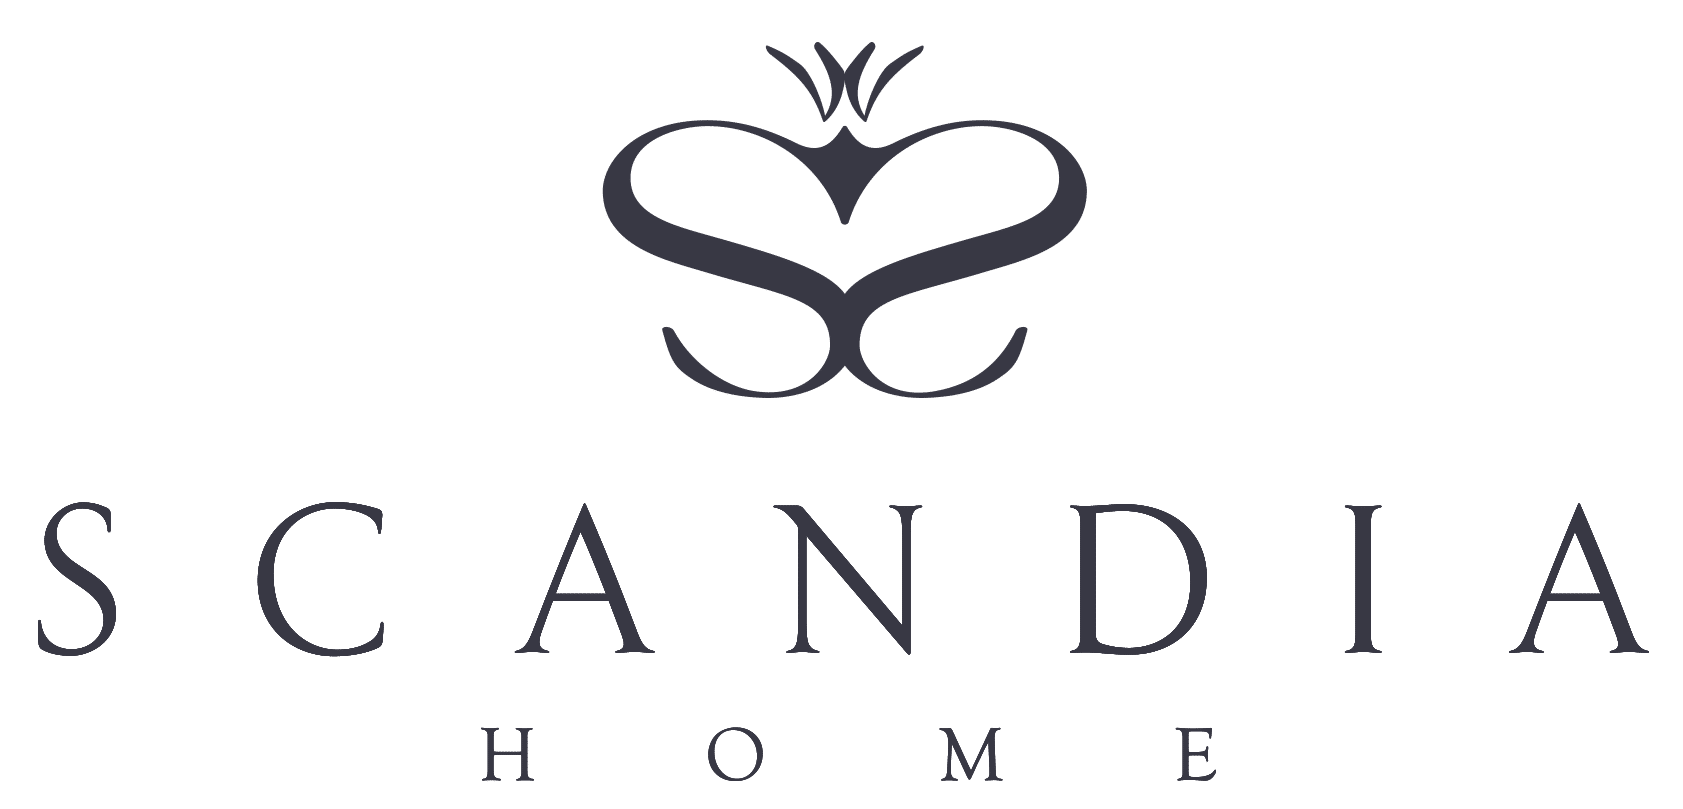 Scandia Home - Luxury Bedding & Fine Linens